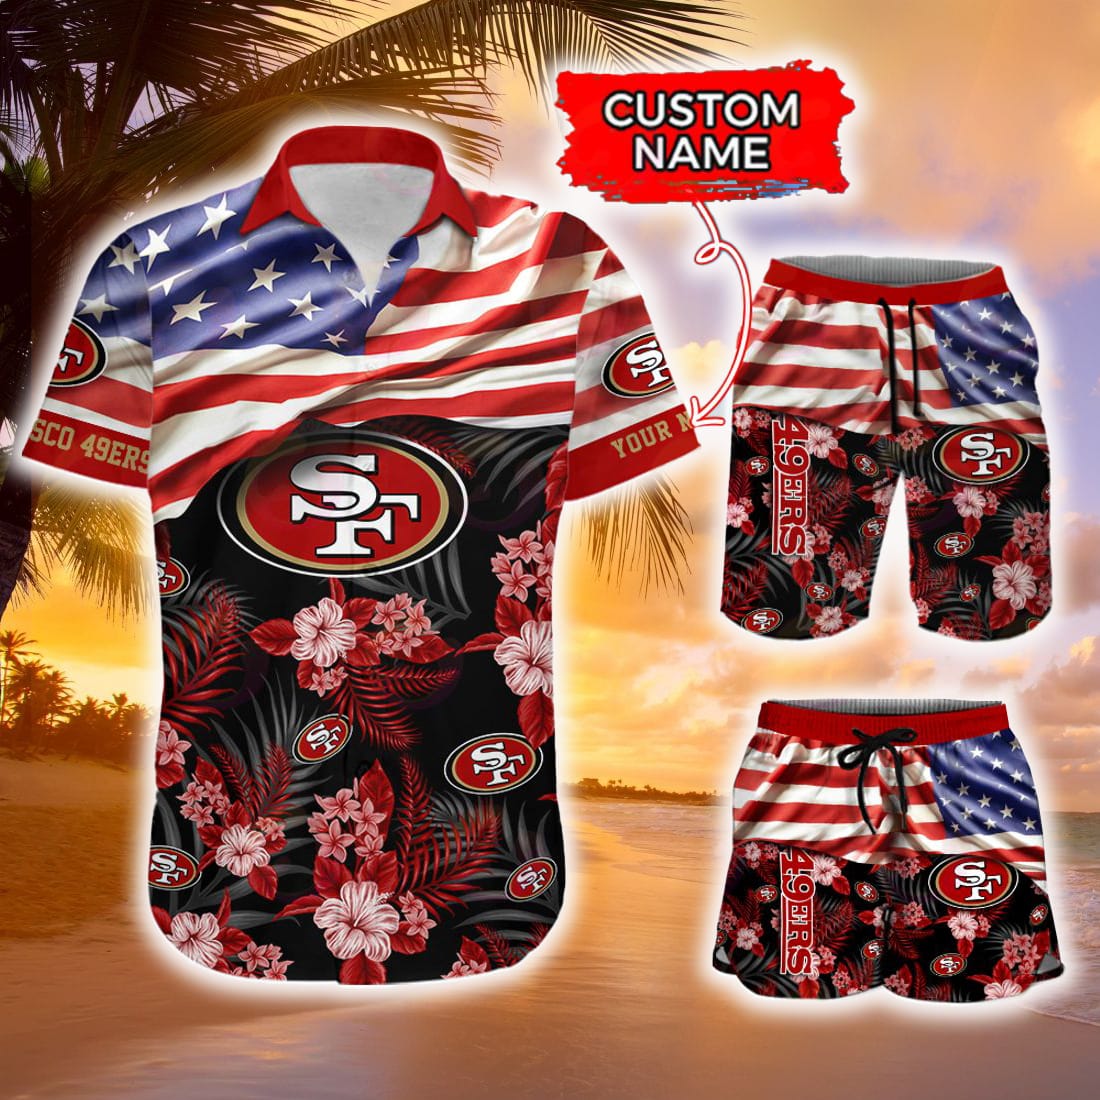 San Francisco 49ers NFL Customized Summer Hawaiian Shirt Limited Edition